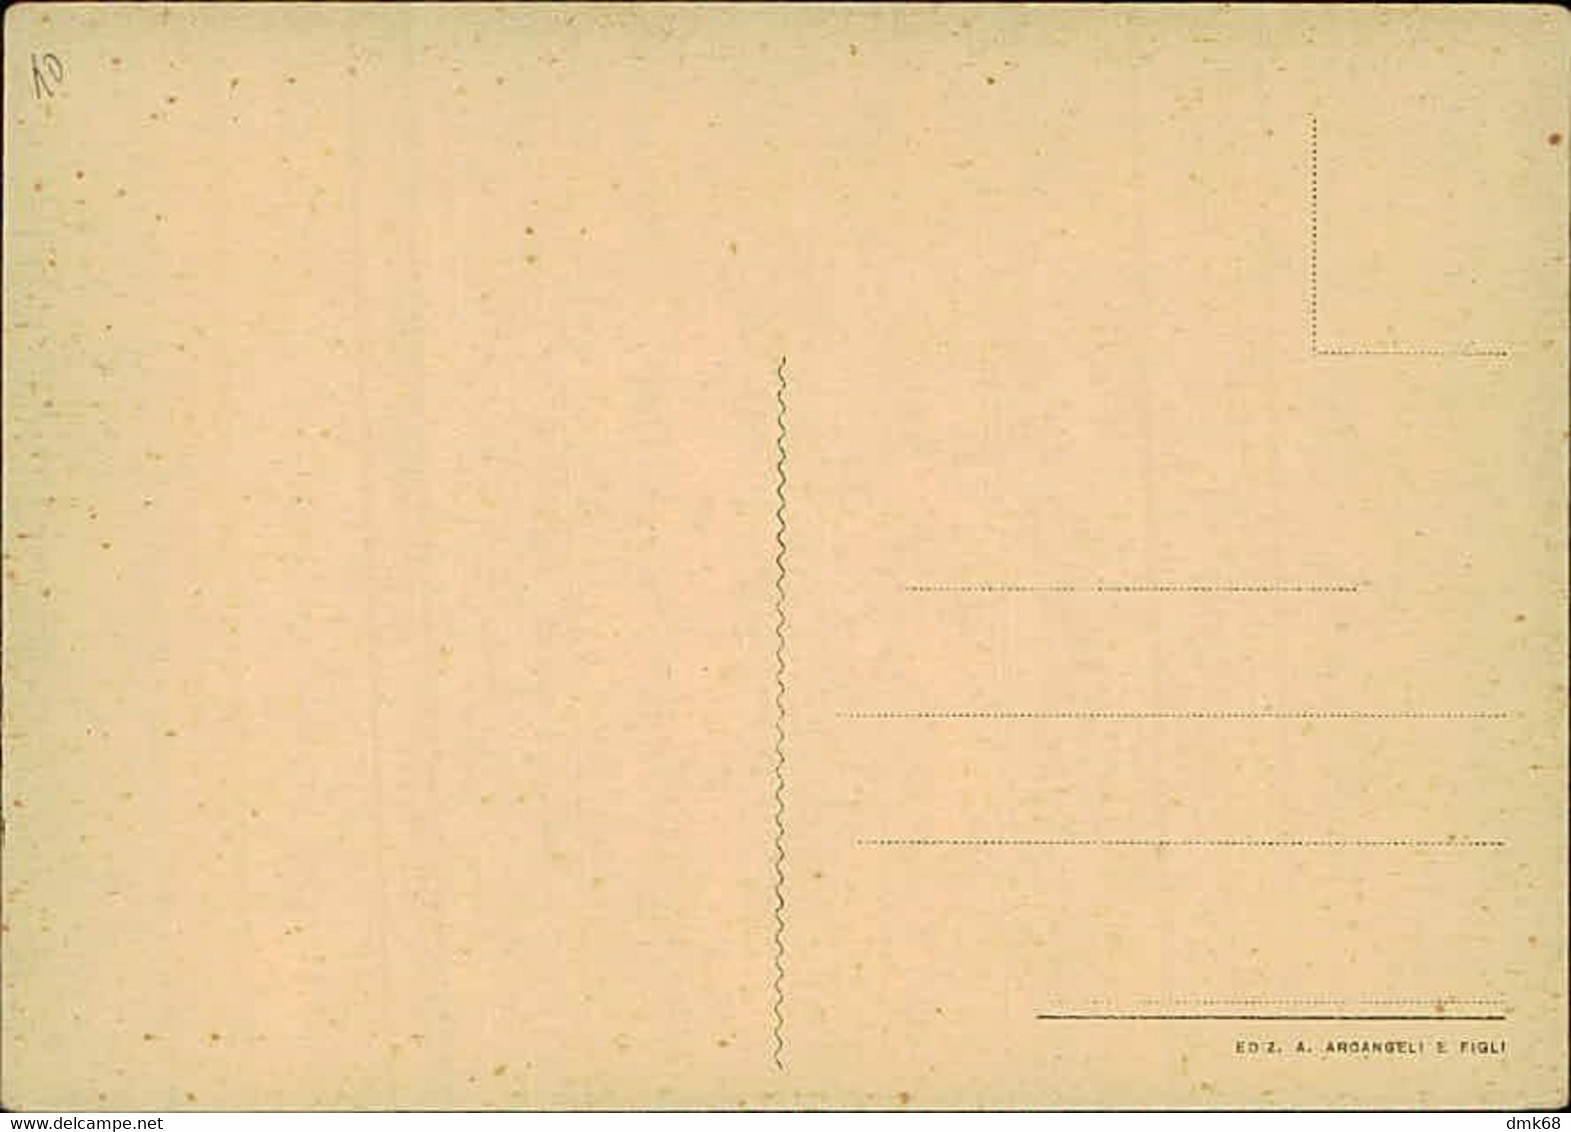 IMOLA - PALAZZO COMUNALE - EDIZ. ARCANGELI - 1940s (13511) - Imola